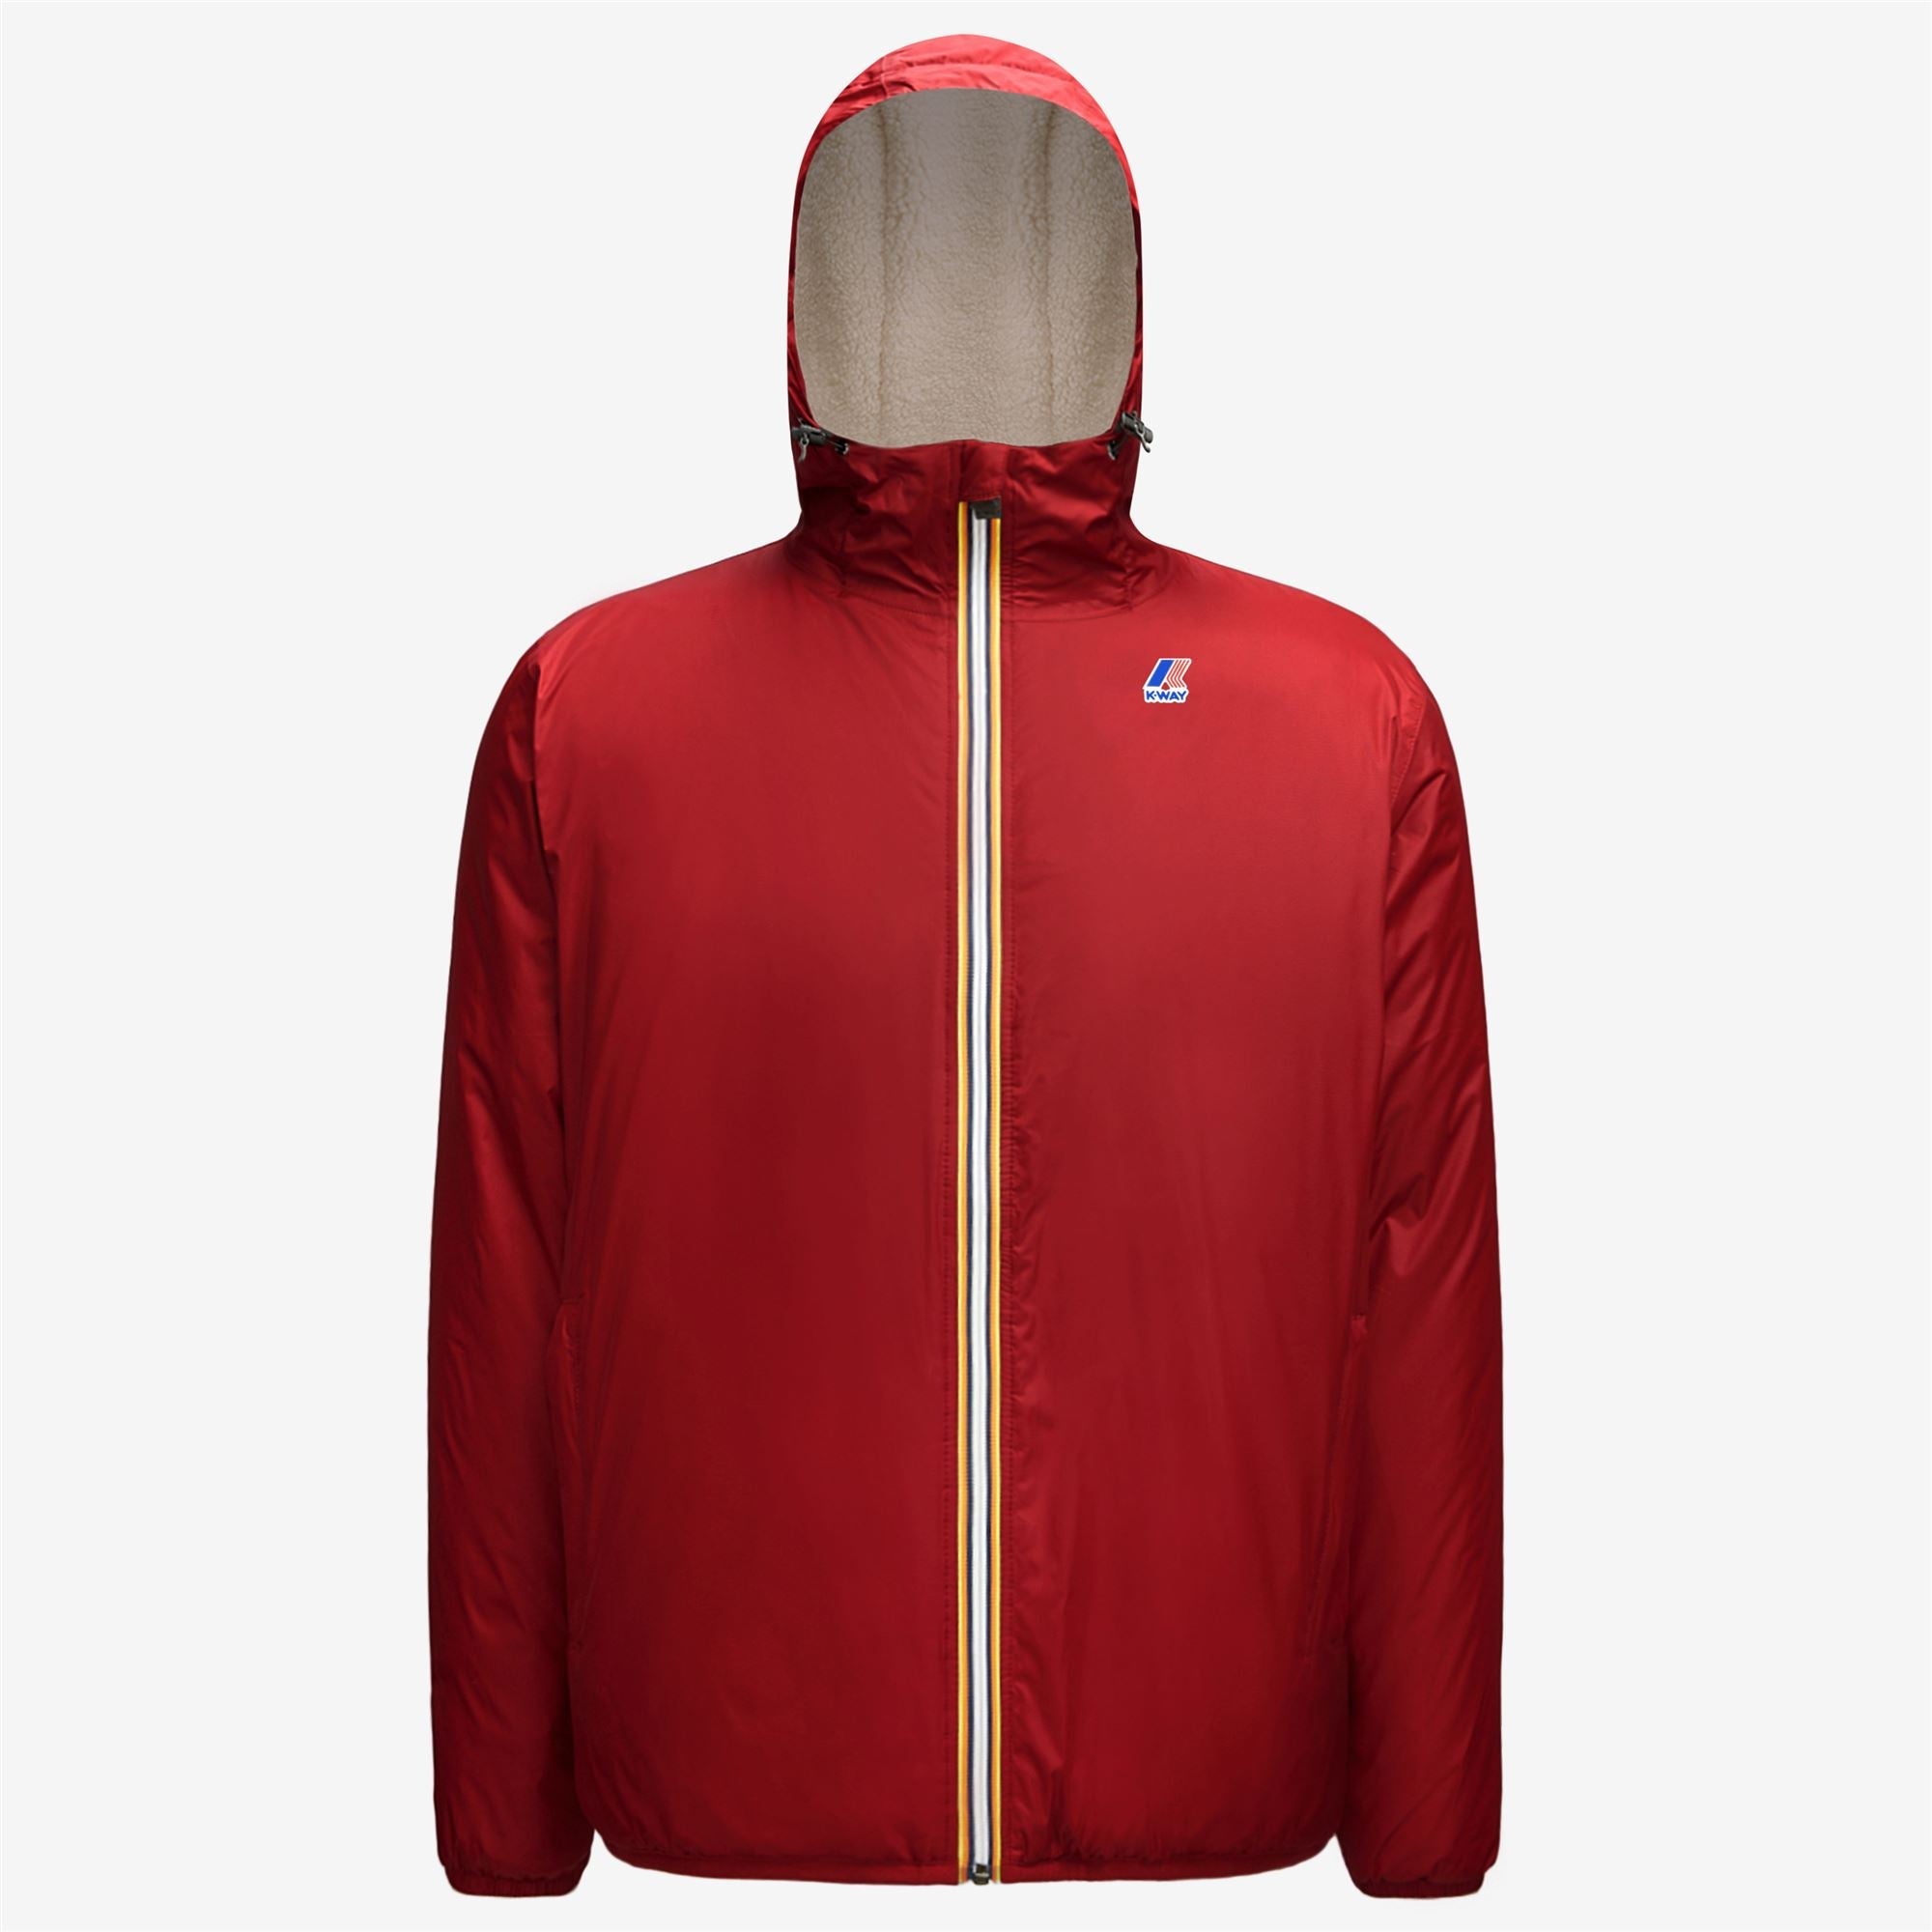 Claude Orsetto - Unisex Lined Full Zip Rain Jacket in Red Dk